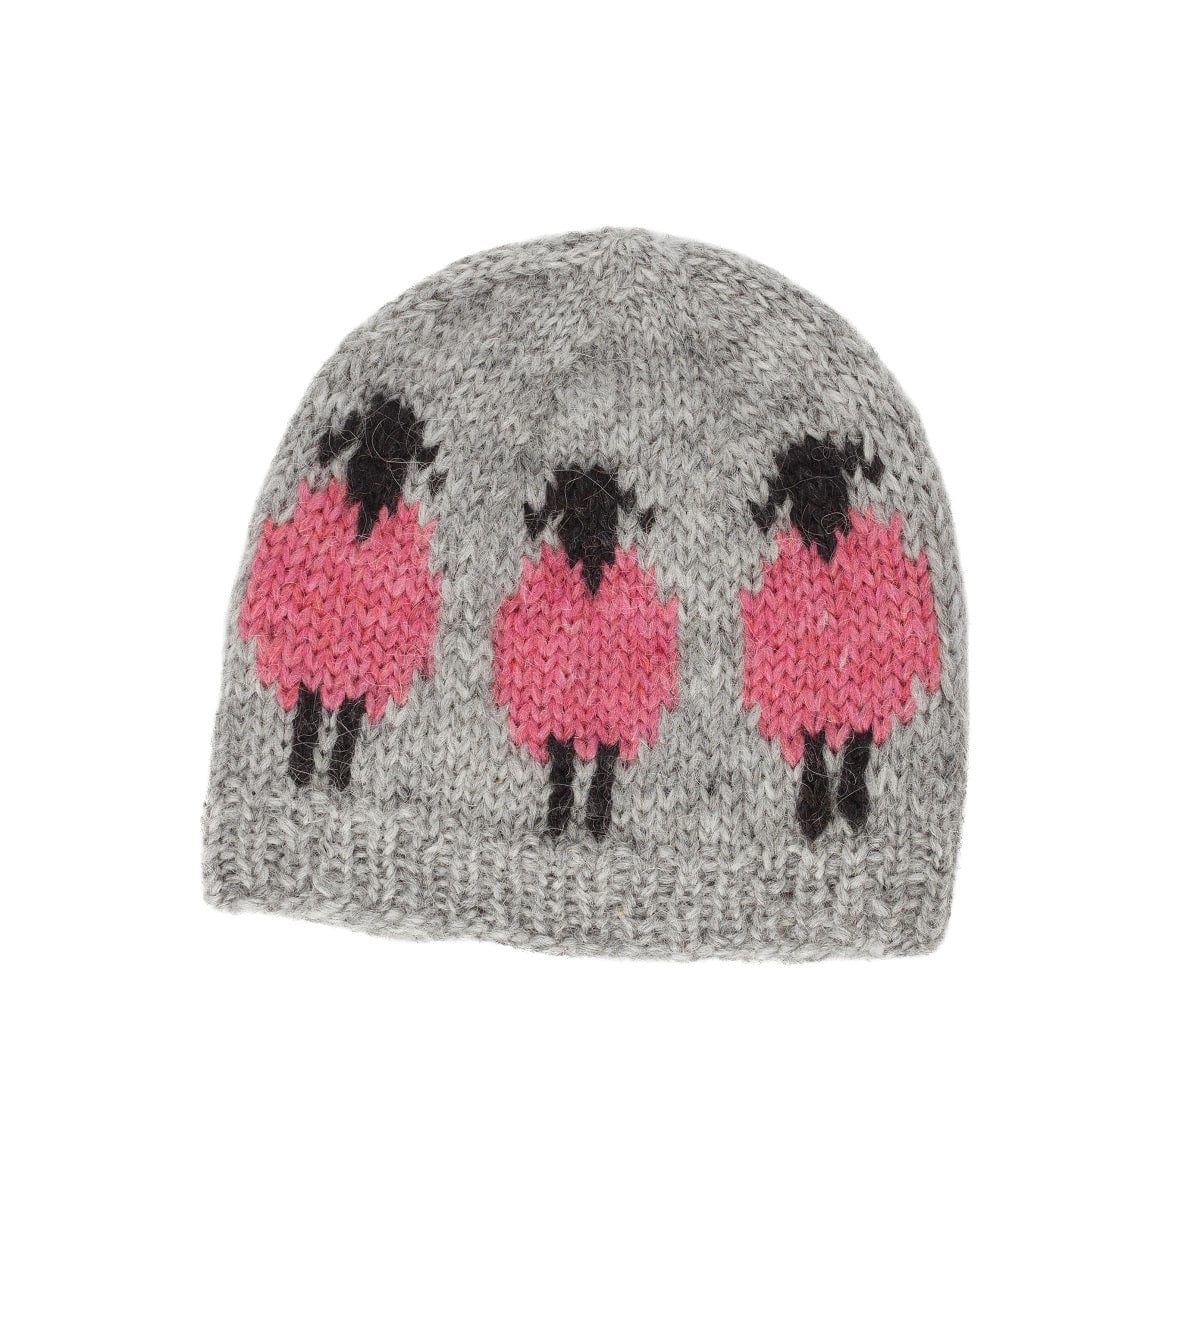 Handknit Wool Hat - Grey / Pink Sheep - The Icelandic Store